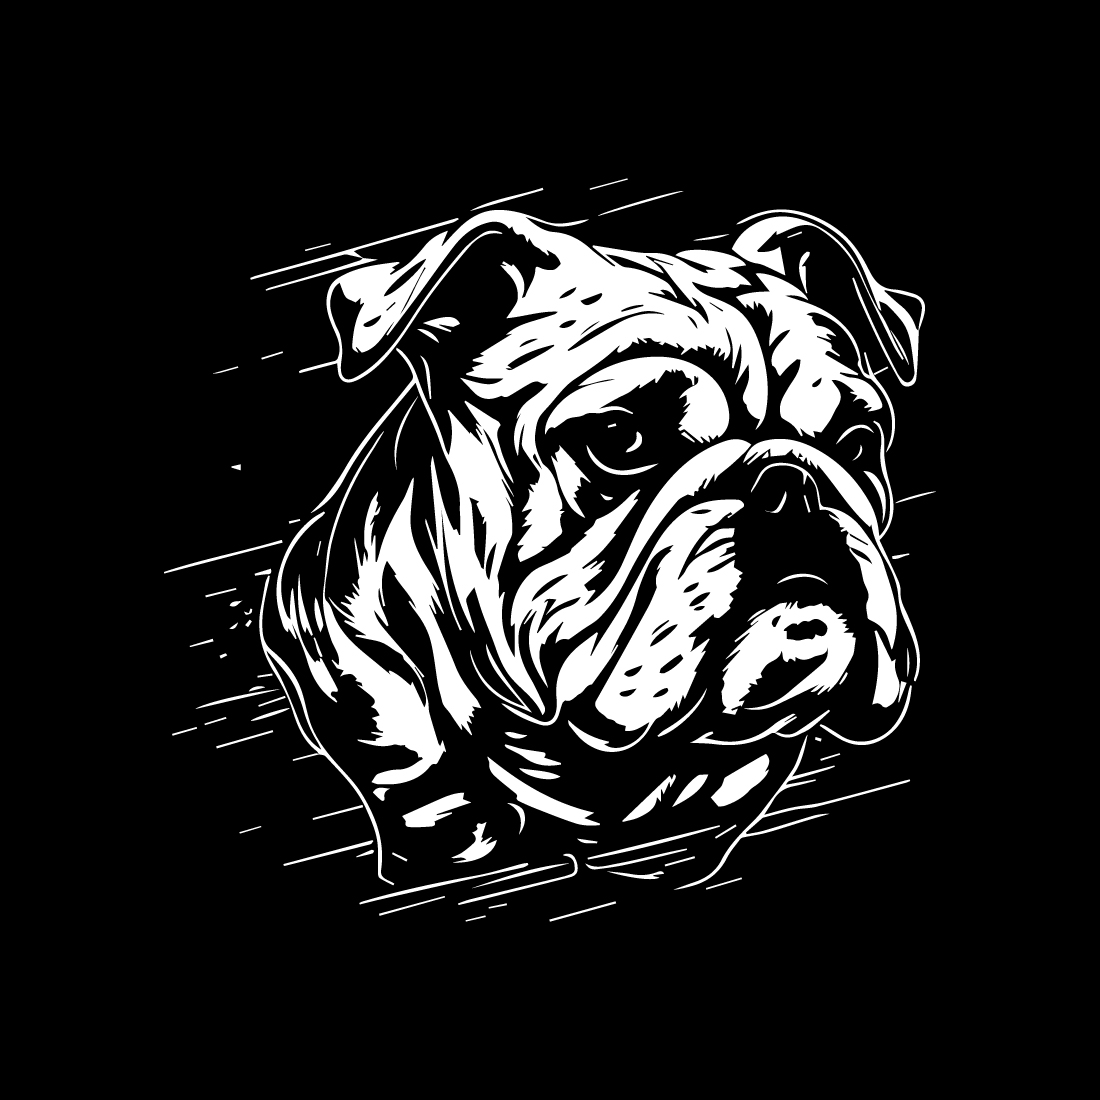 Bull dog T-shirt design preview image.